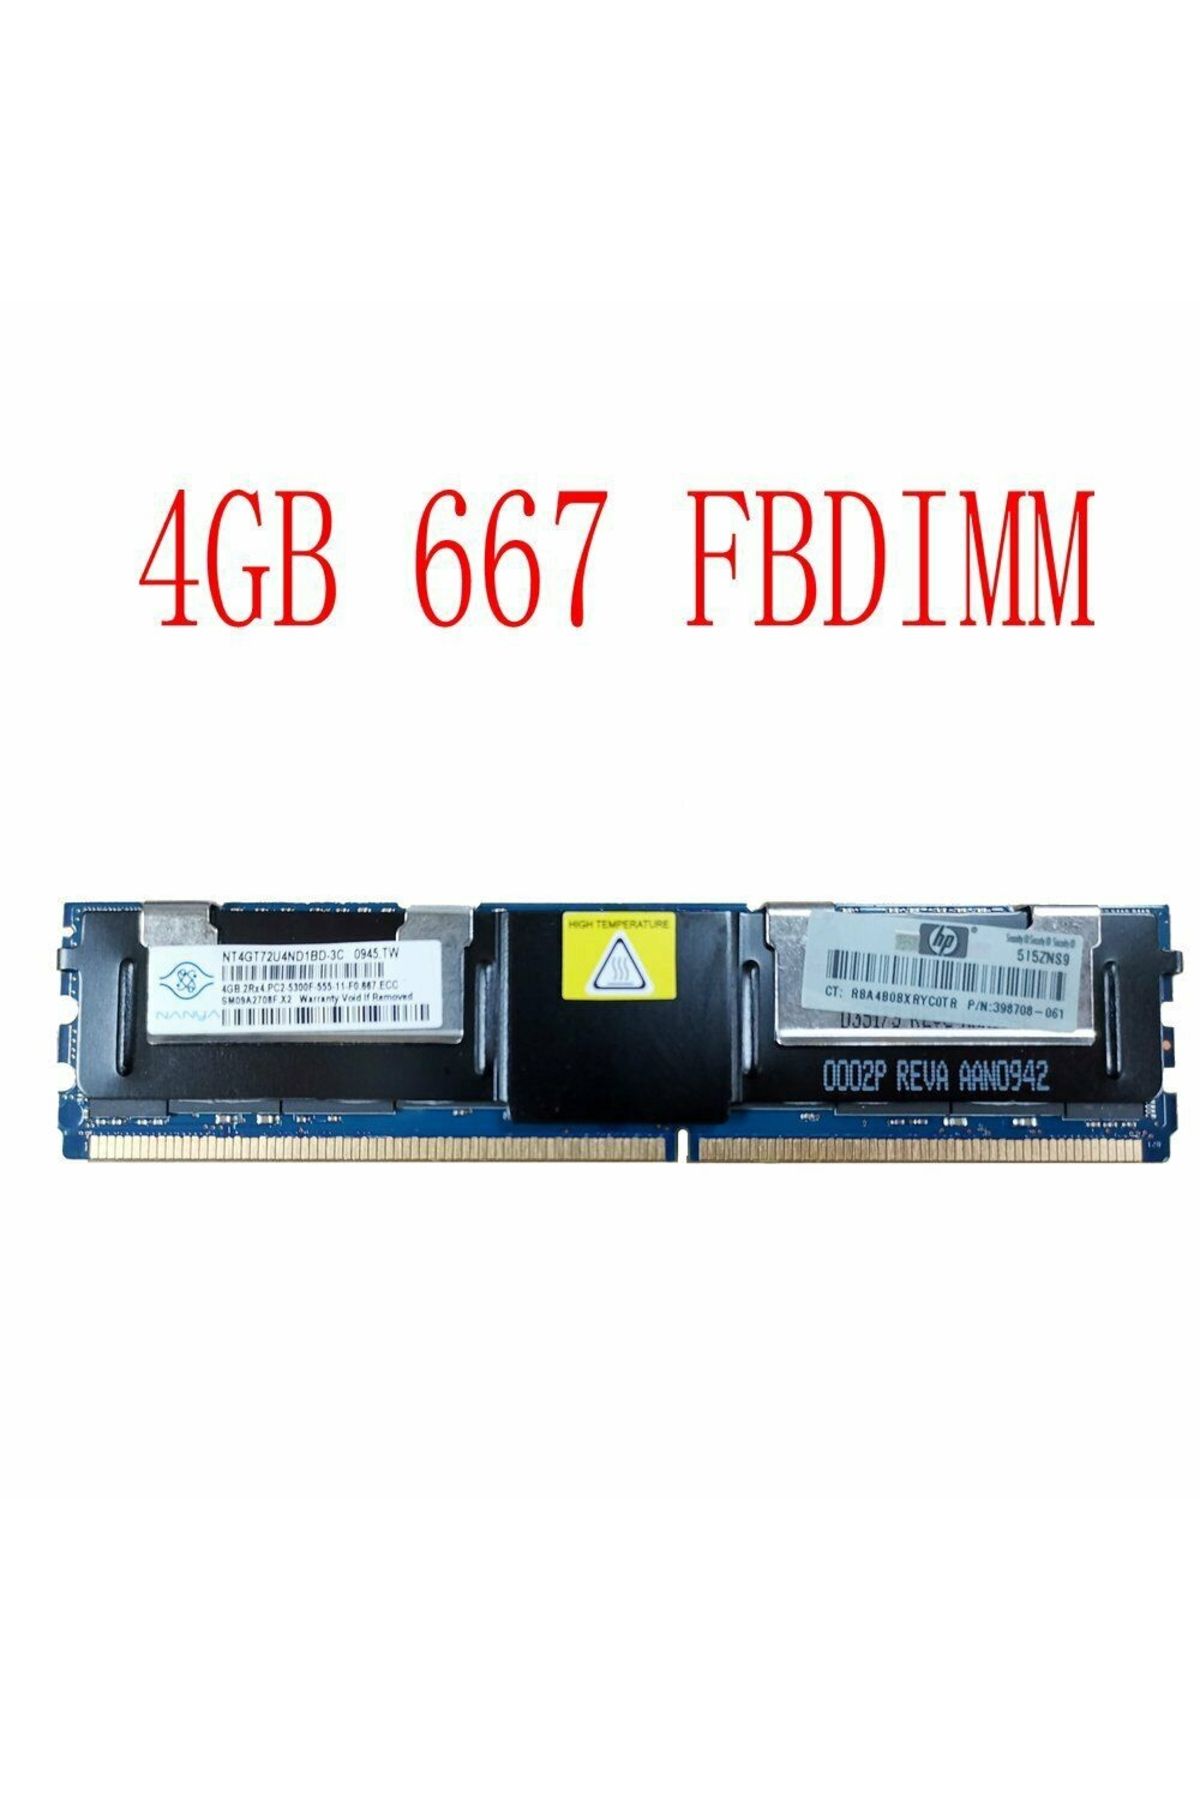 HP 4GB (1X4GB) PC2-5300F ECC DDR2 667MHZ CL5 HP PROLIANT SERVER MEMORY 398708-061